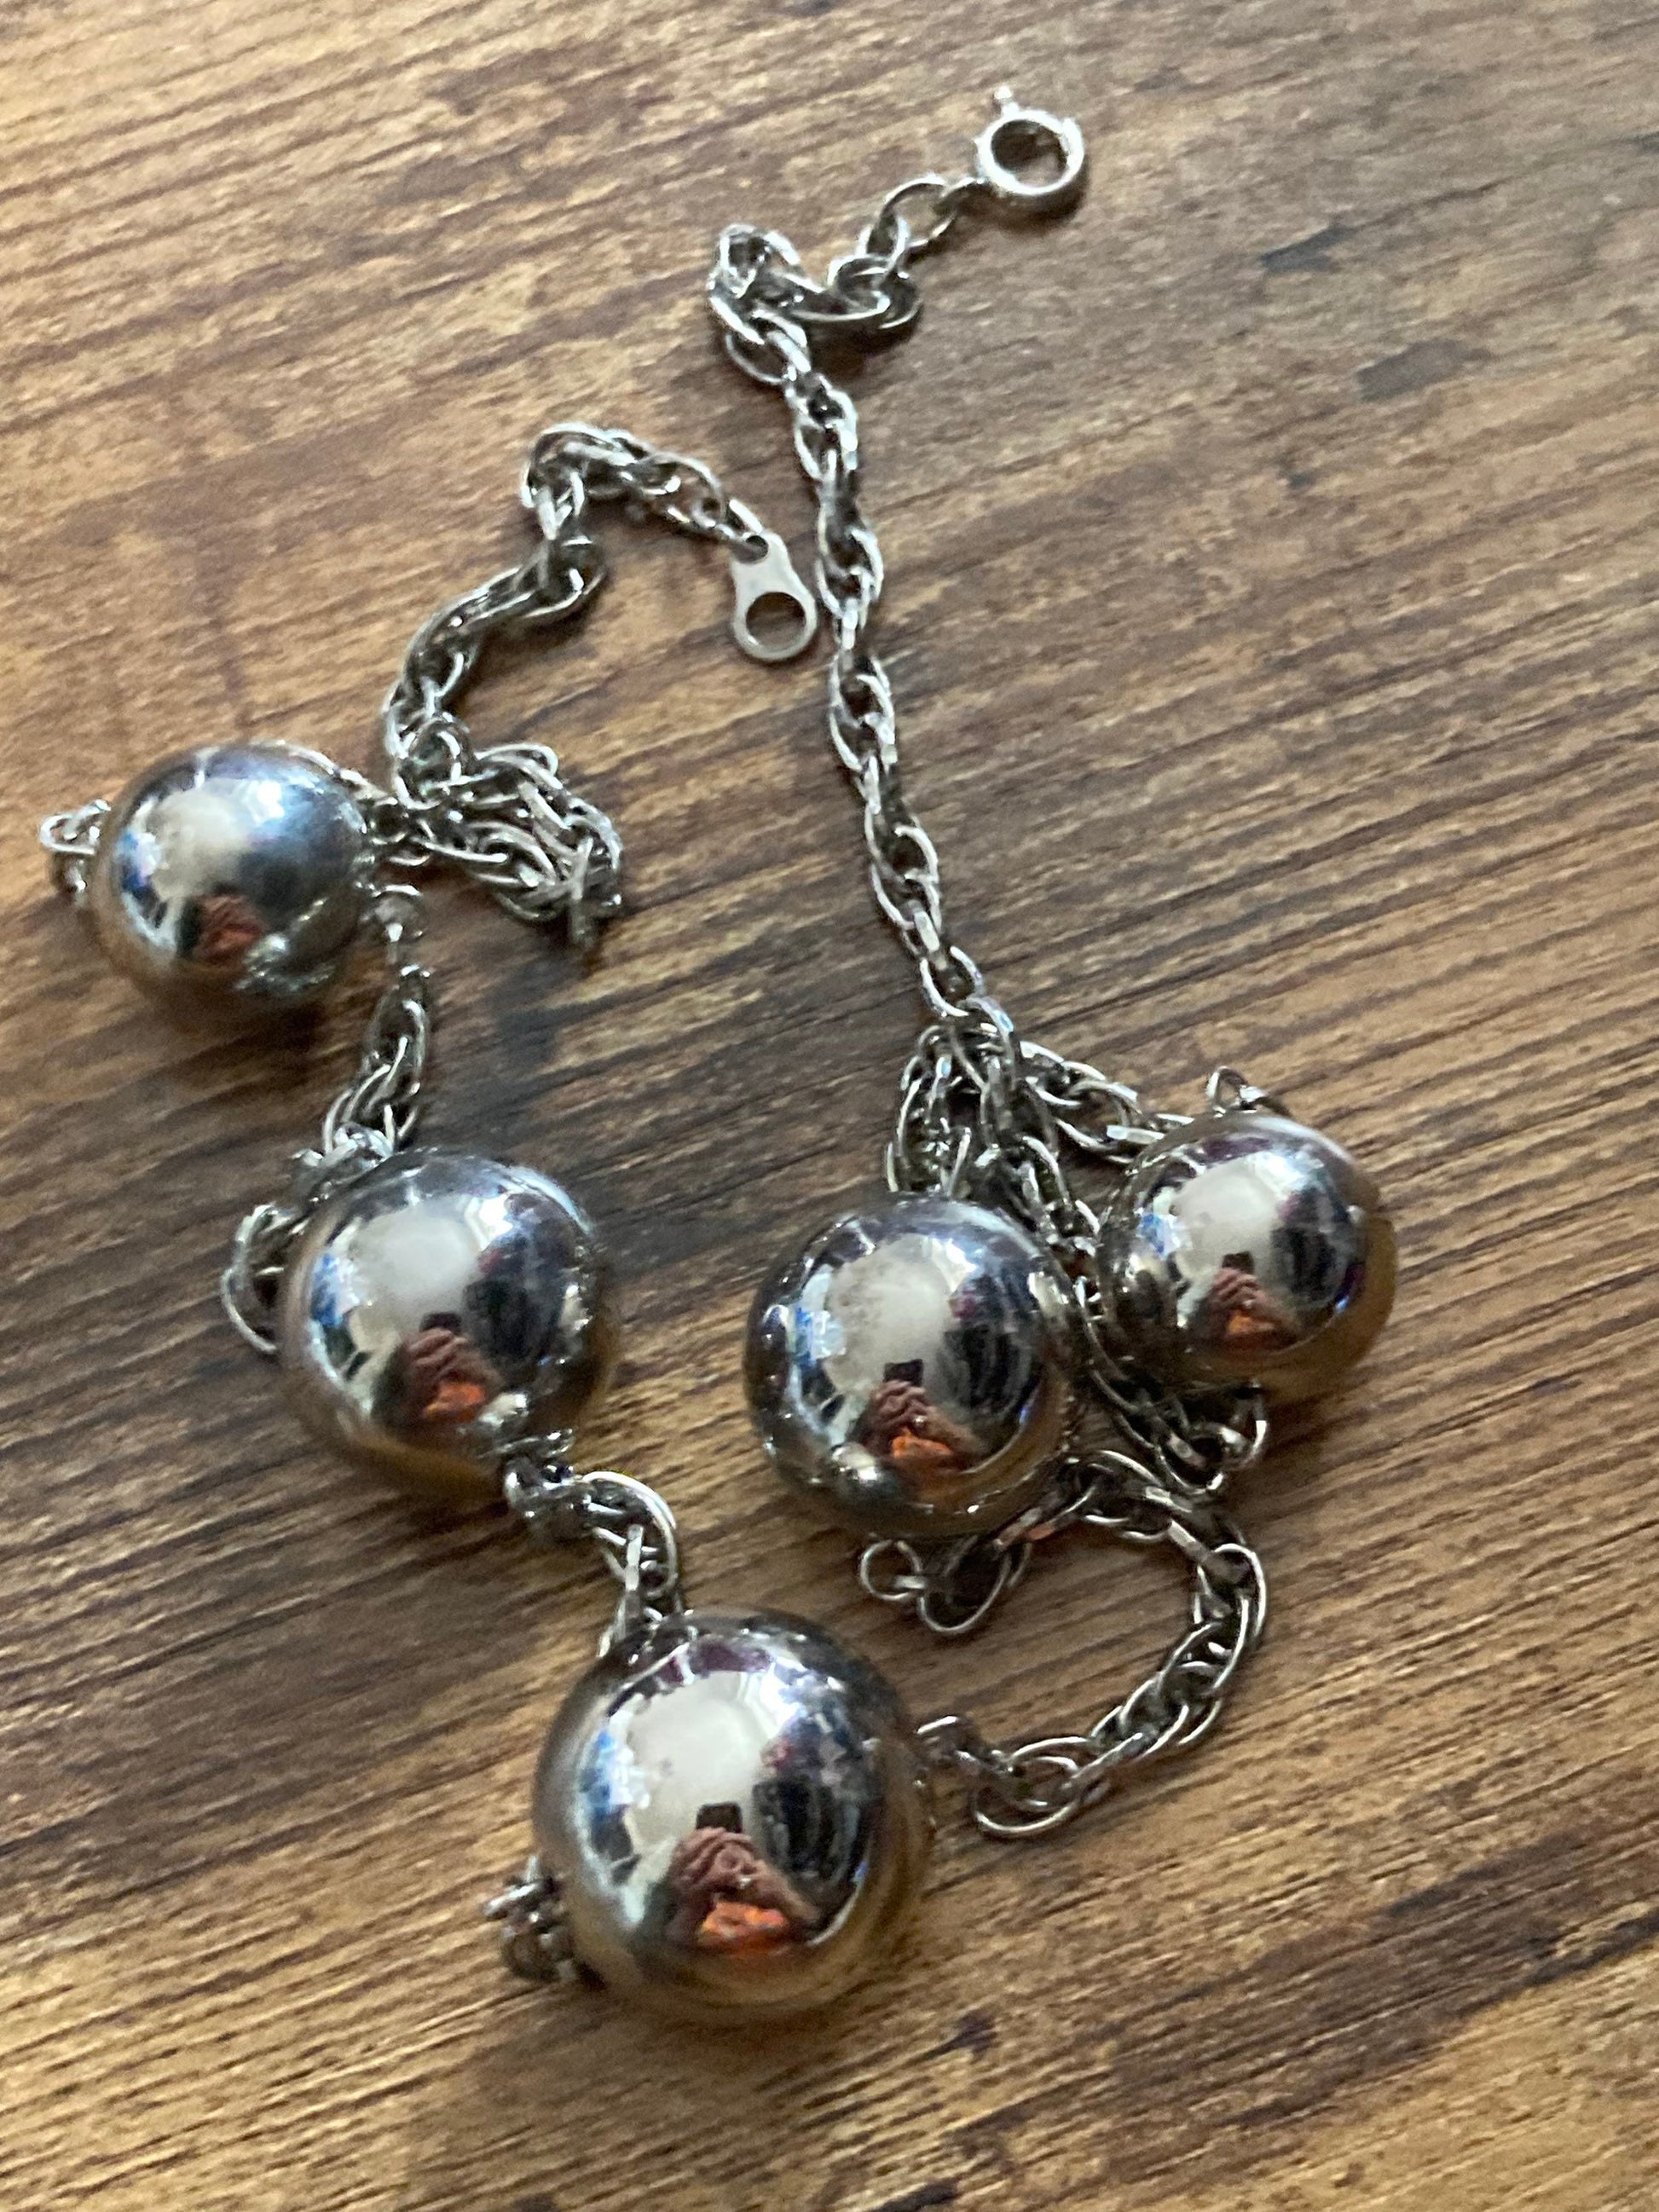 Oversized silver tone modernist 2cm ball station link necklace 54cm long